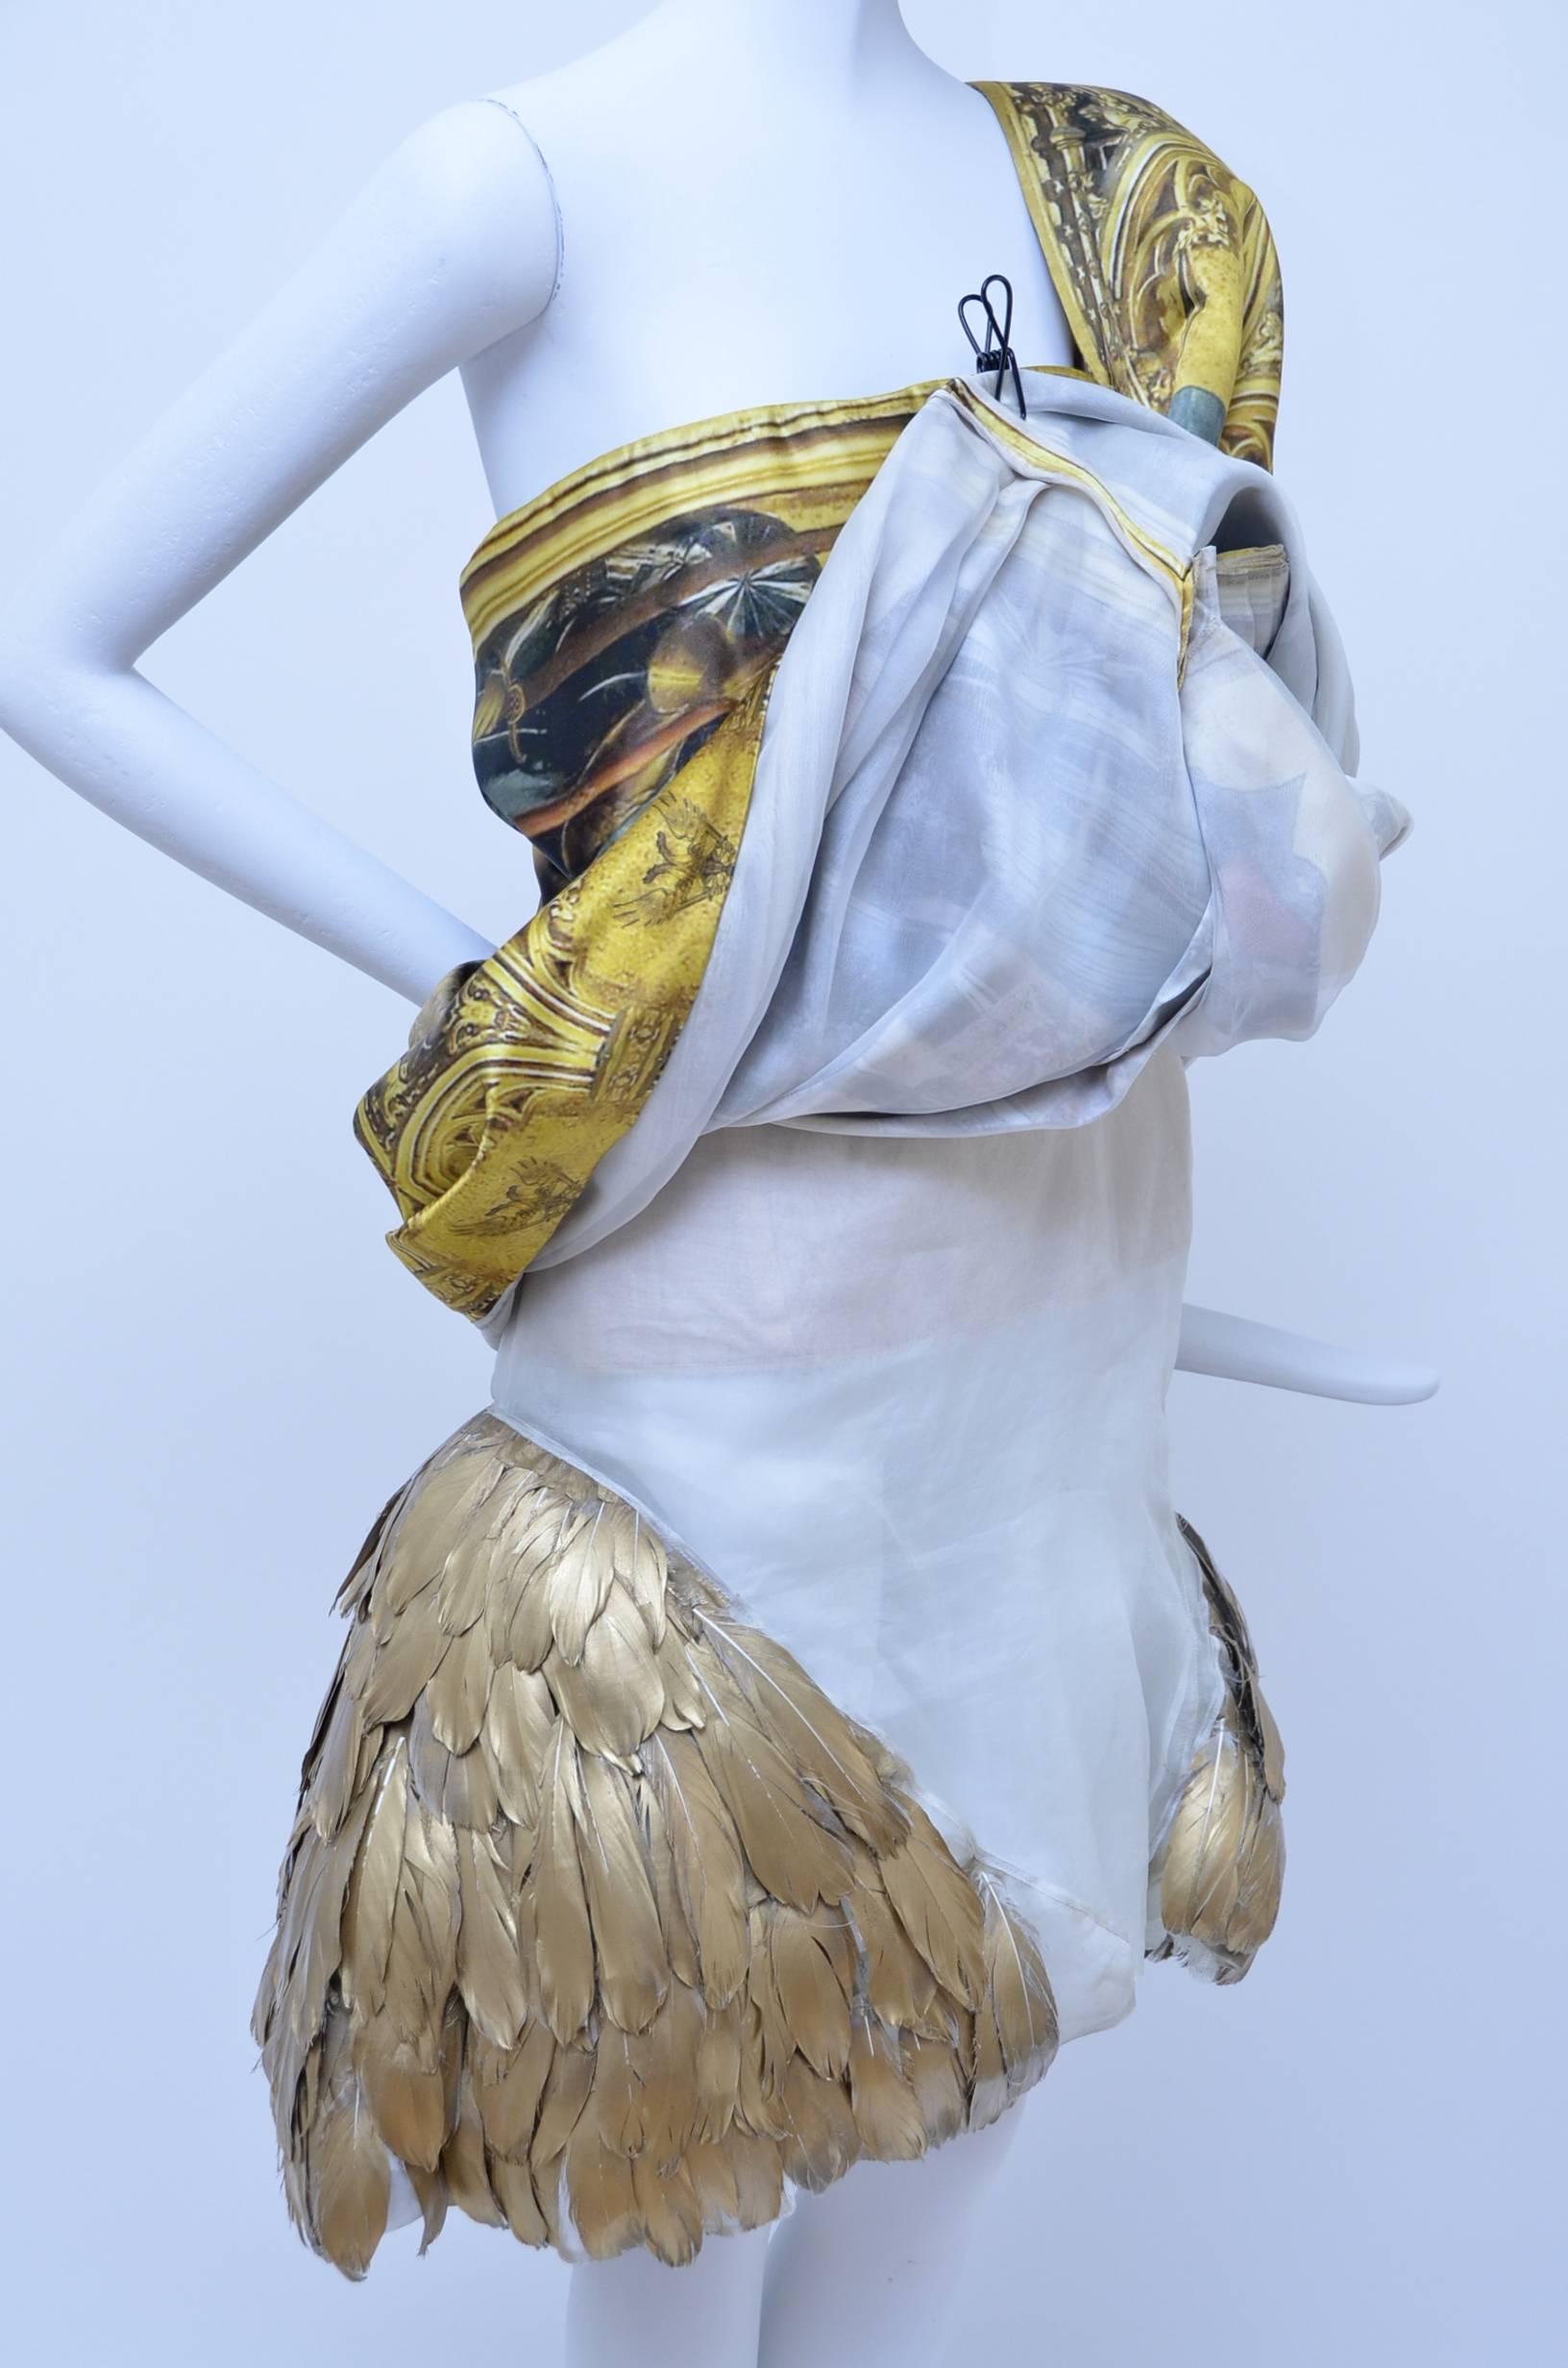 Alexander McQueen Final Collection 2010 “Angels and Demons” Dress 40 1